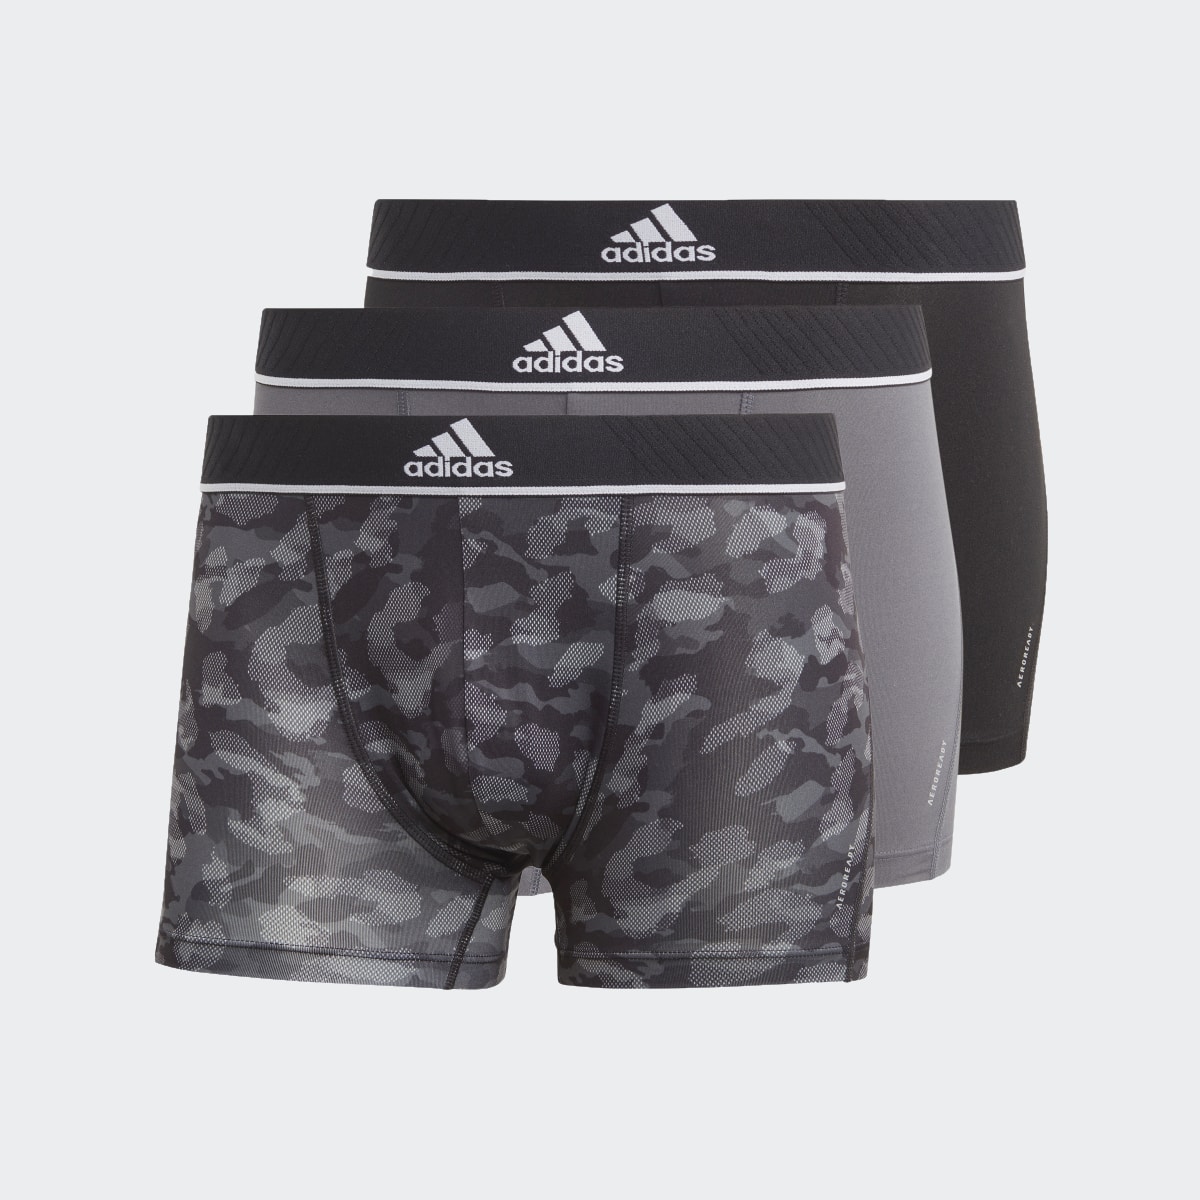 Adidas Active Micro Flex Eco Trunk Underwear 3 Pack. 6